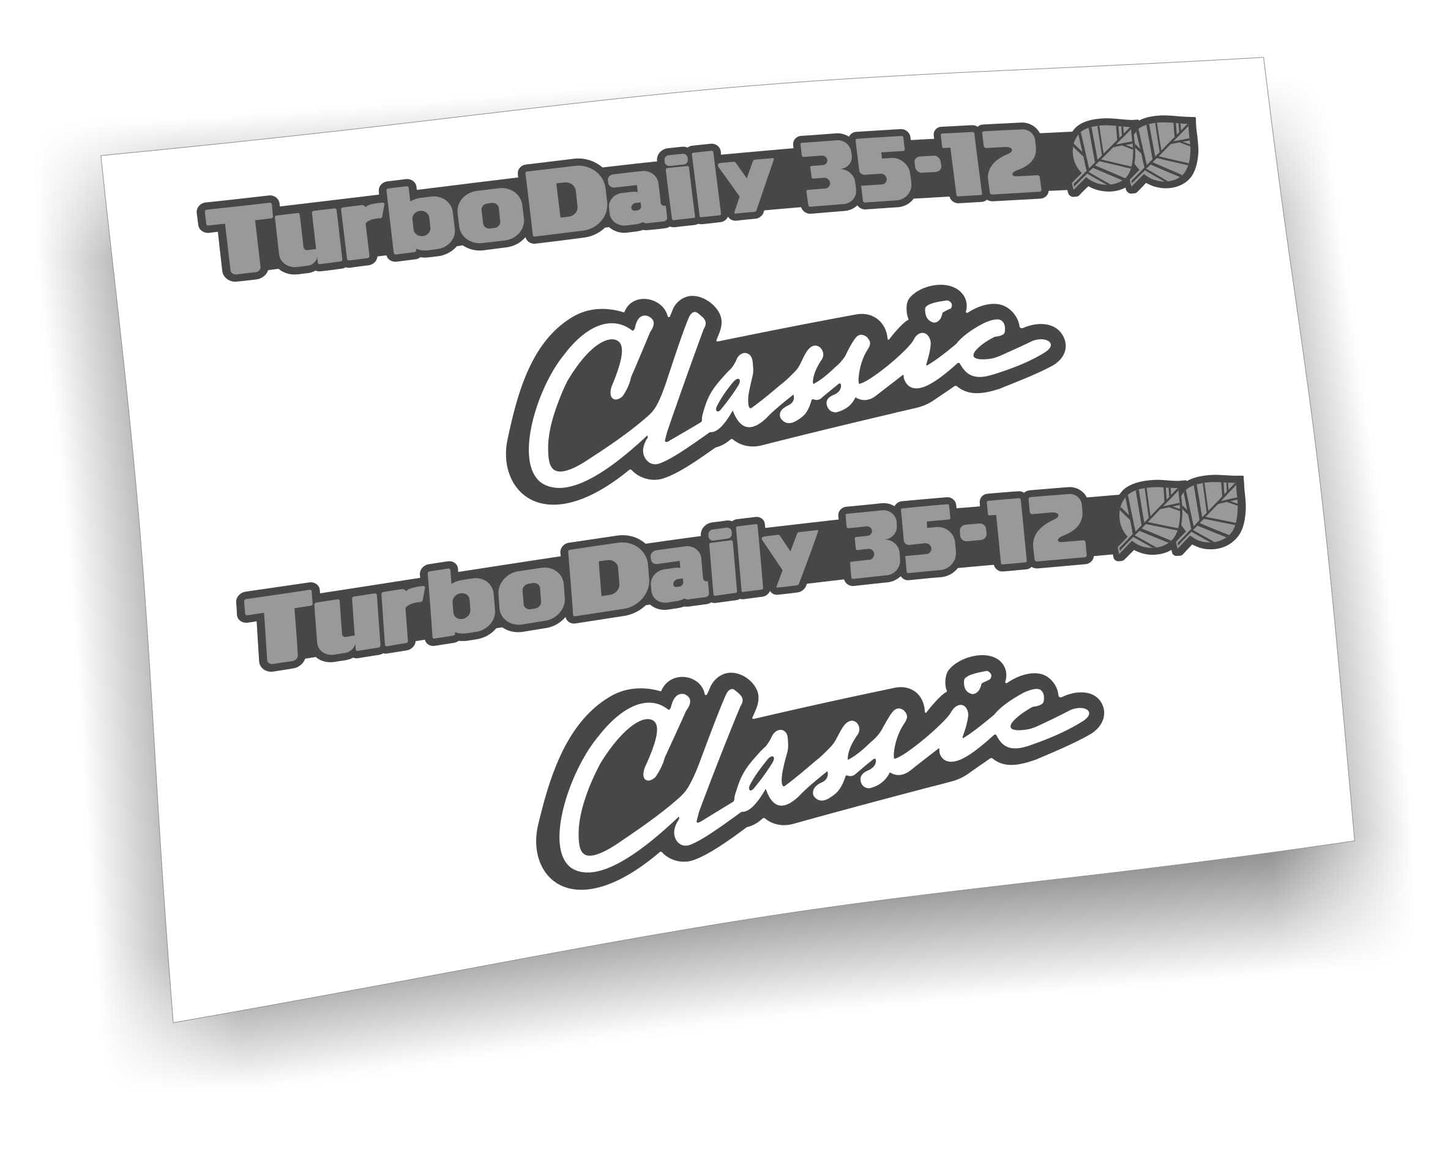 Adesivi iveco turbo daily 3512 classic